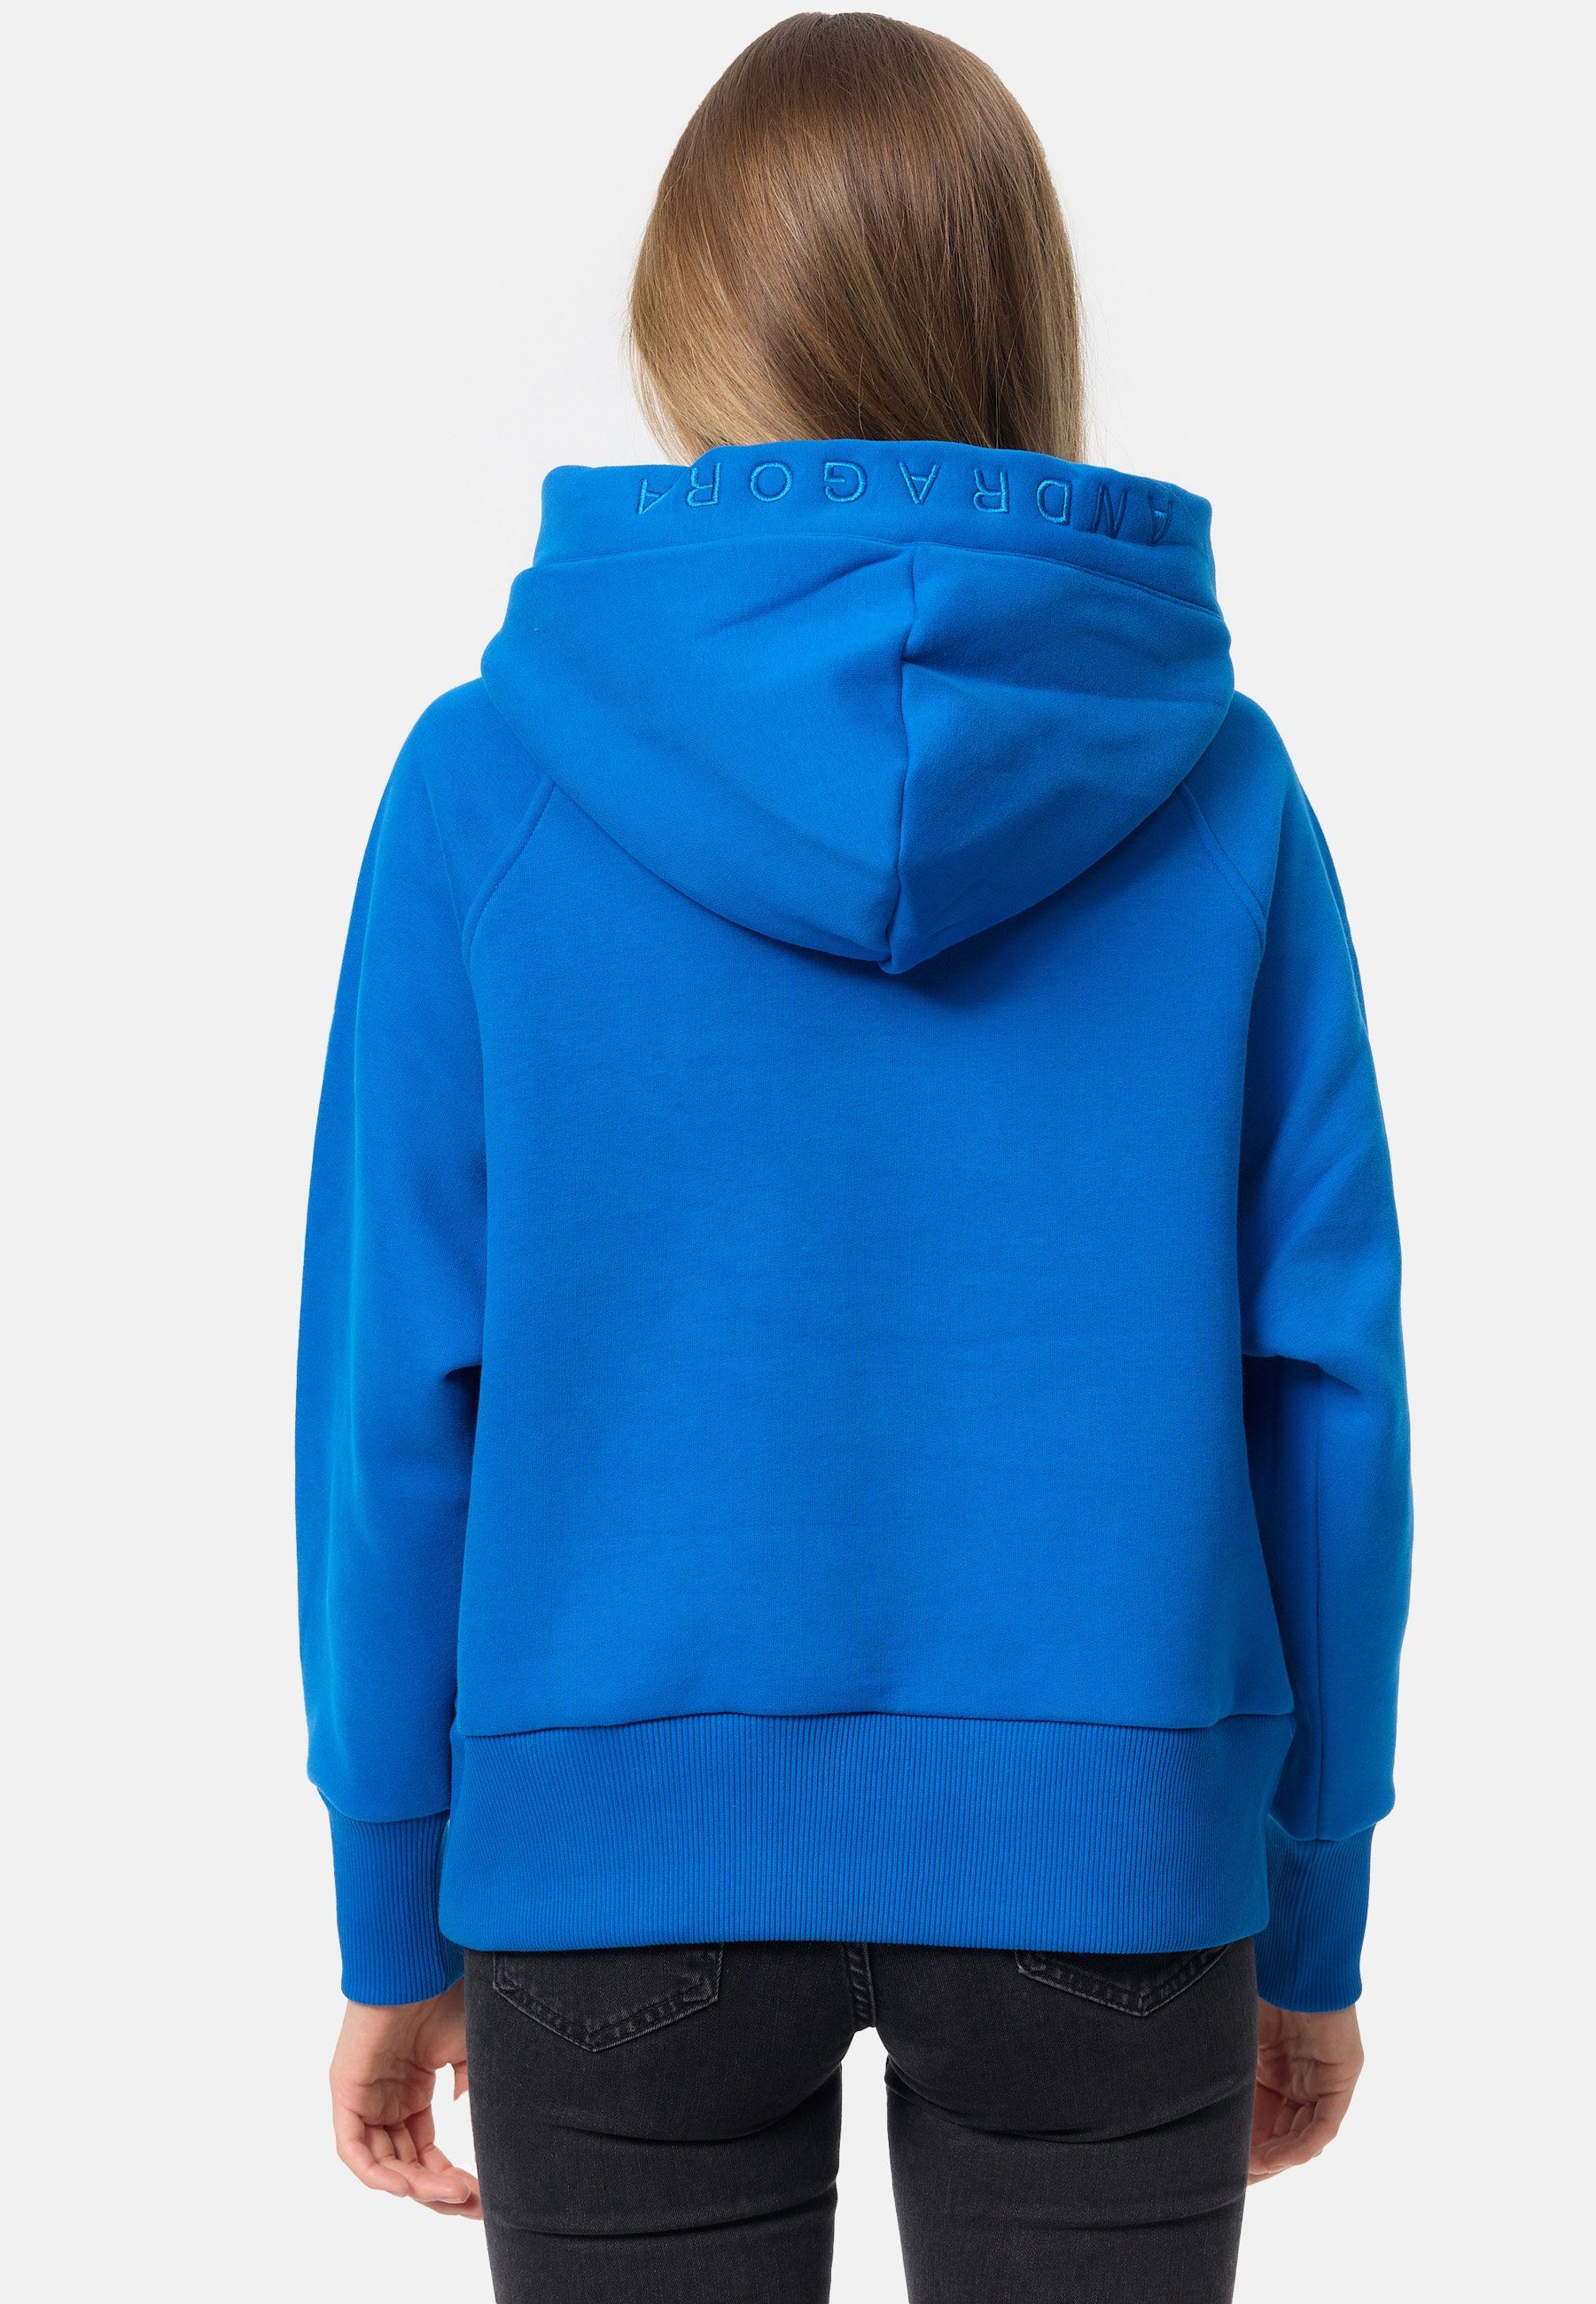 Decay Kapuzensweatshirt klassischen im dunkelblau Design